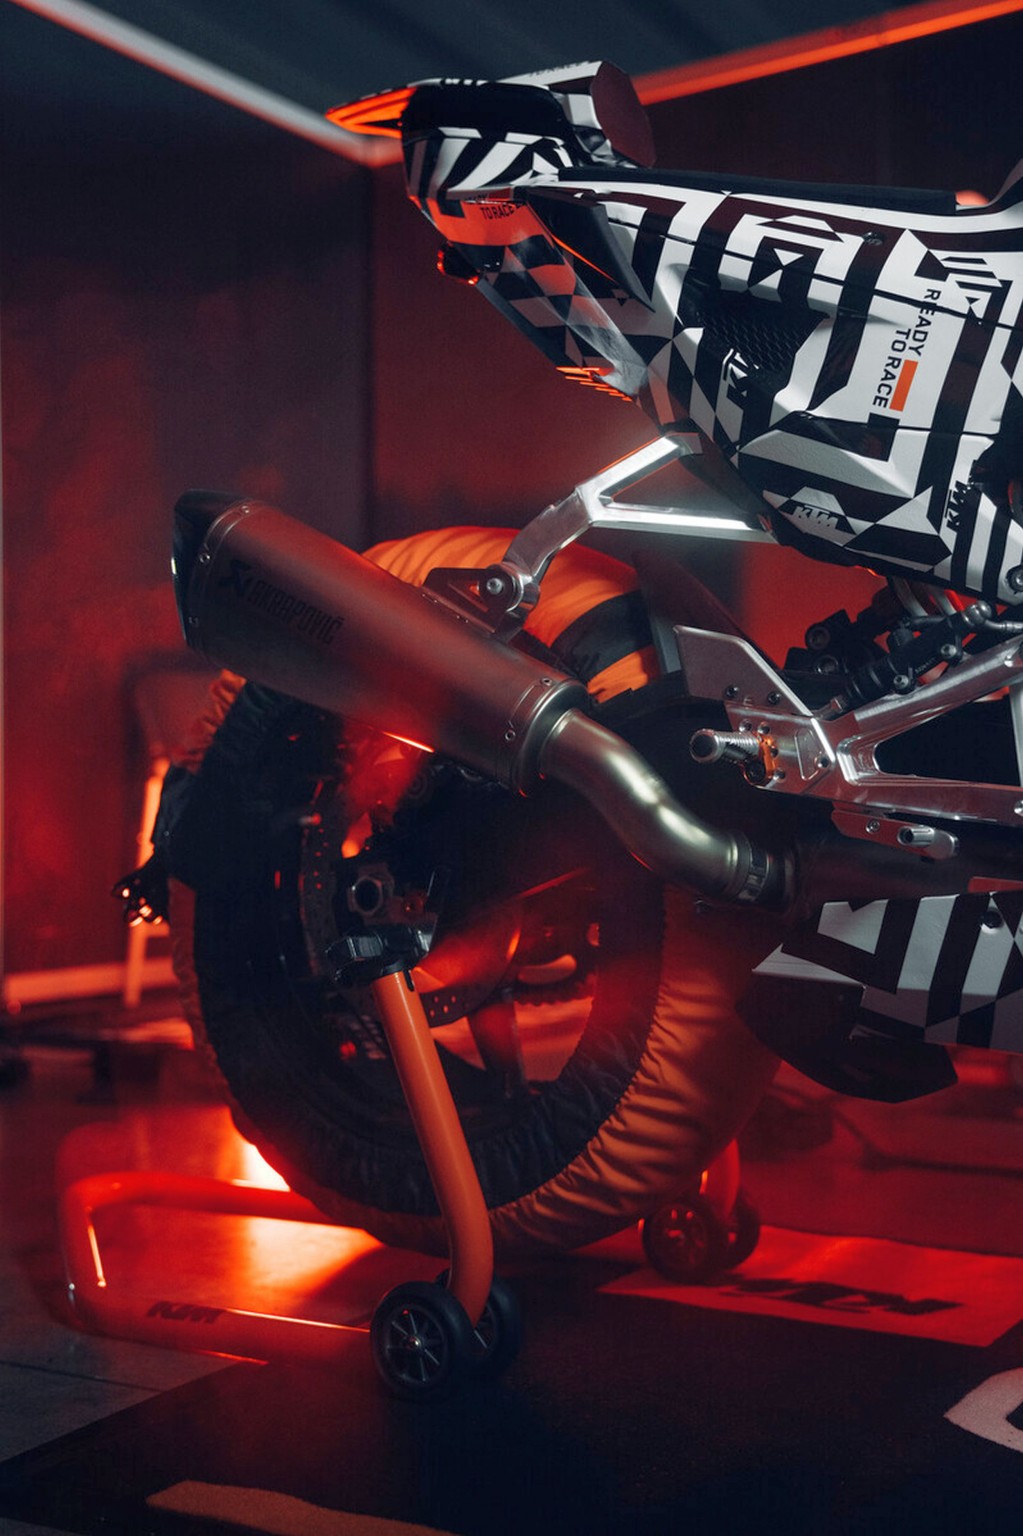 KTM 990 RC R: ¡por fin la moto deportiva de pura sangre para la carretera! - Imagen 42